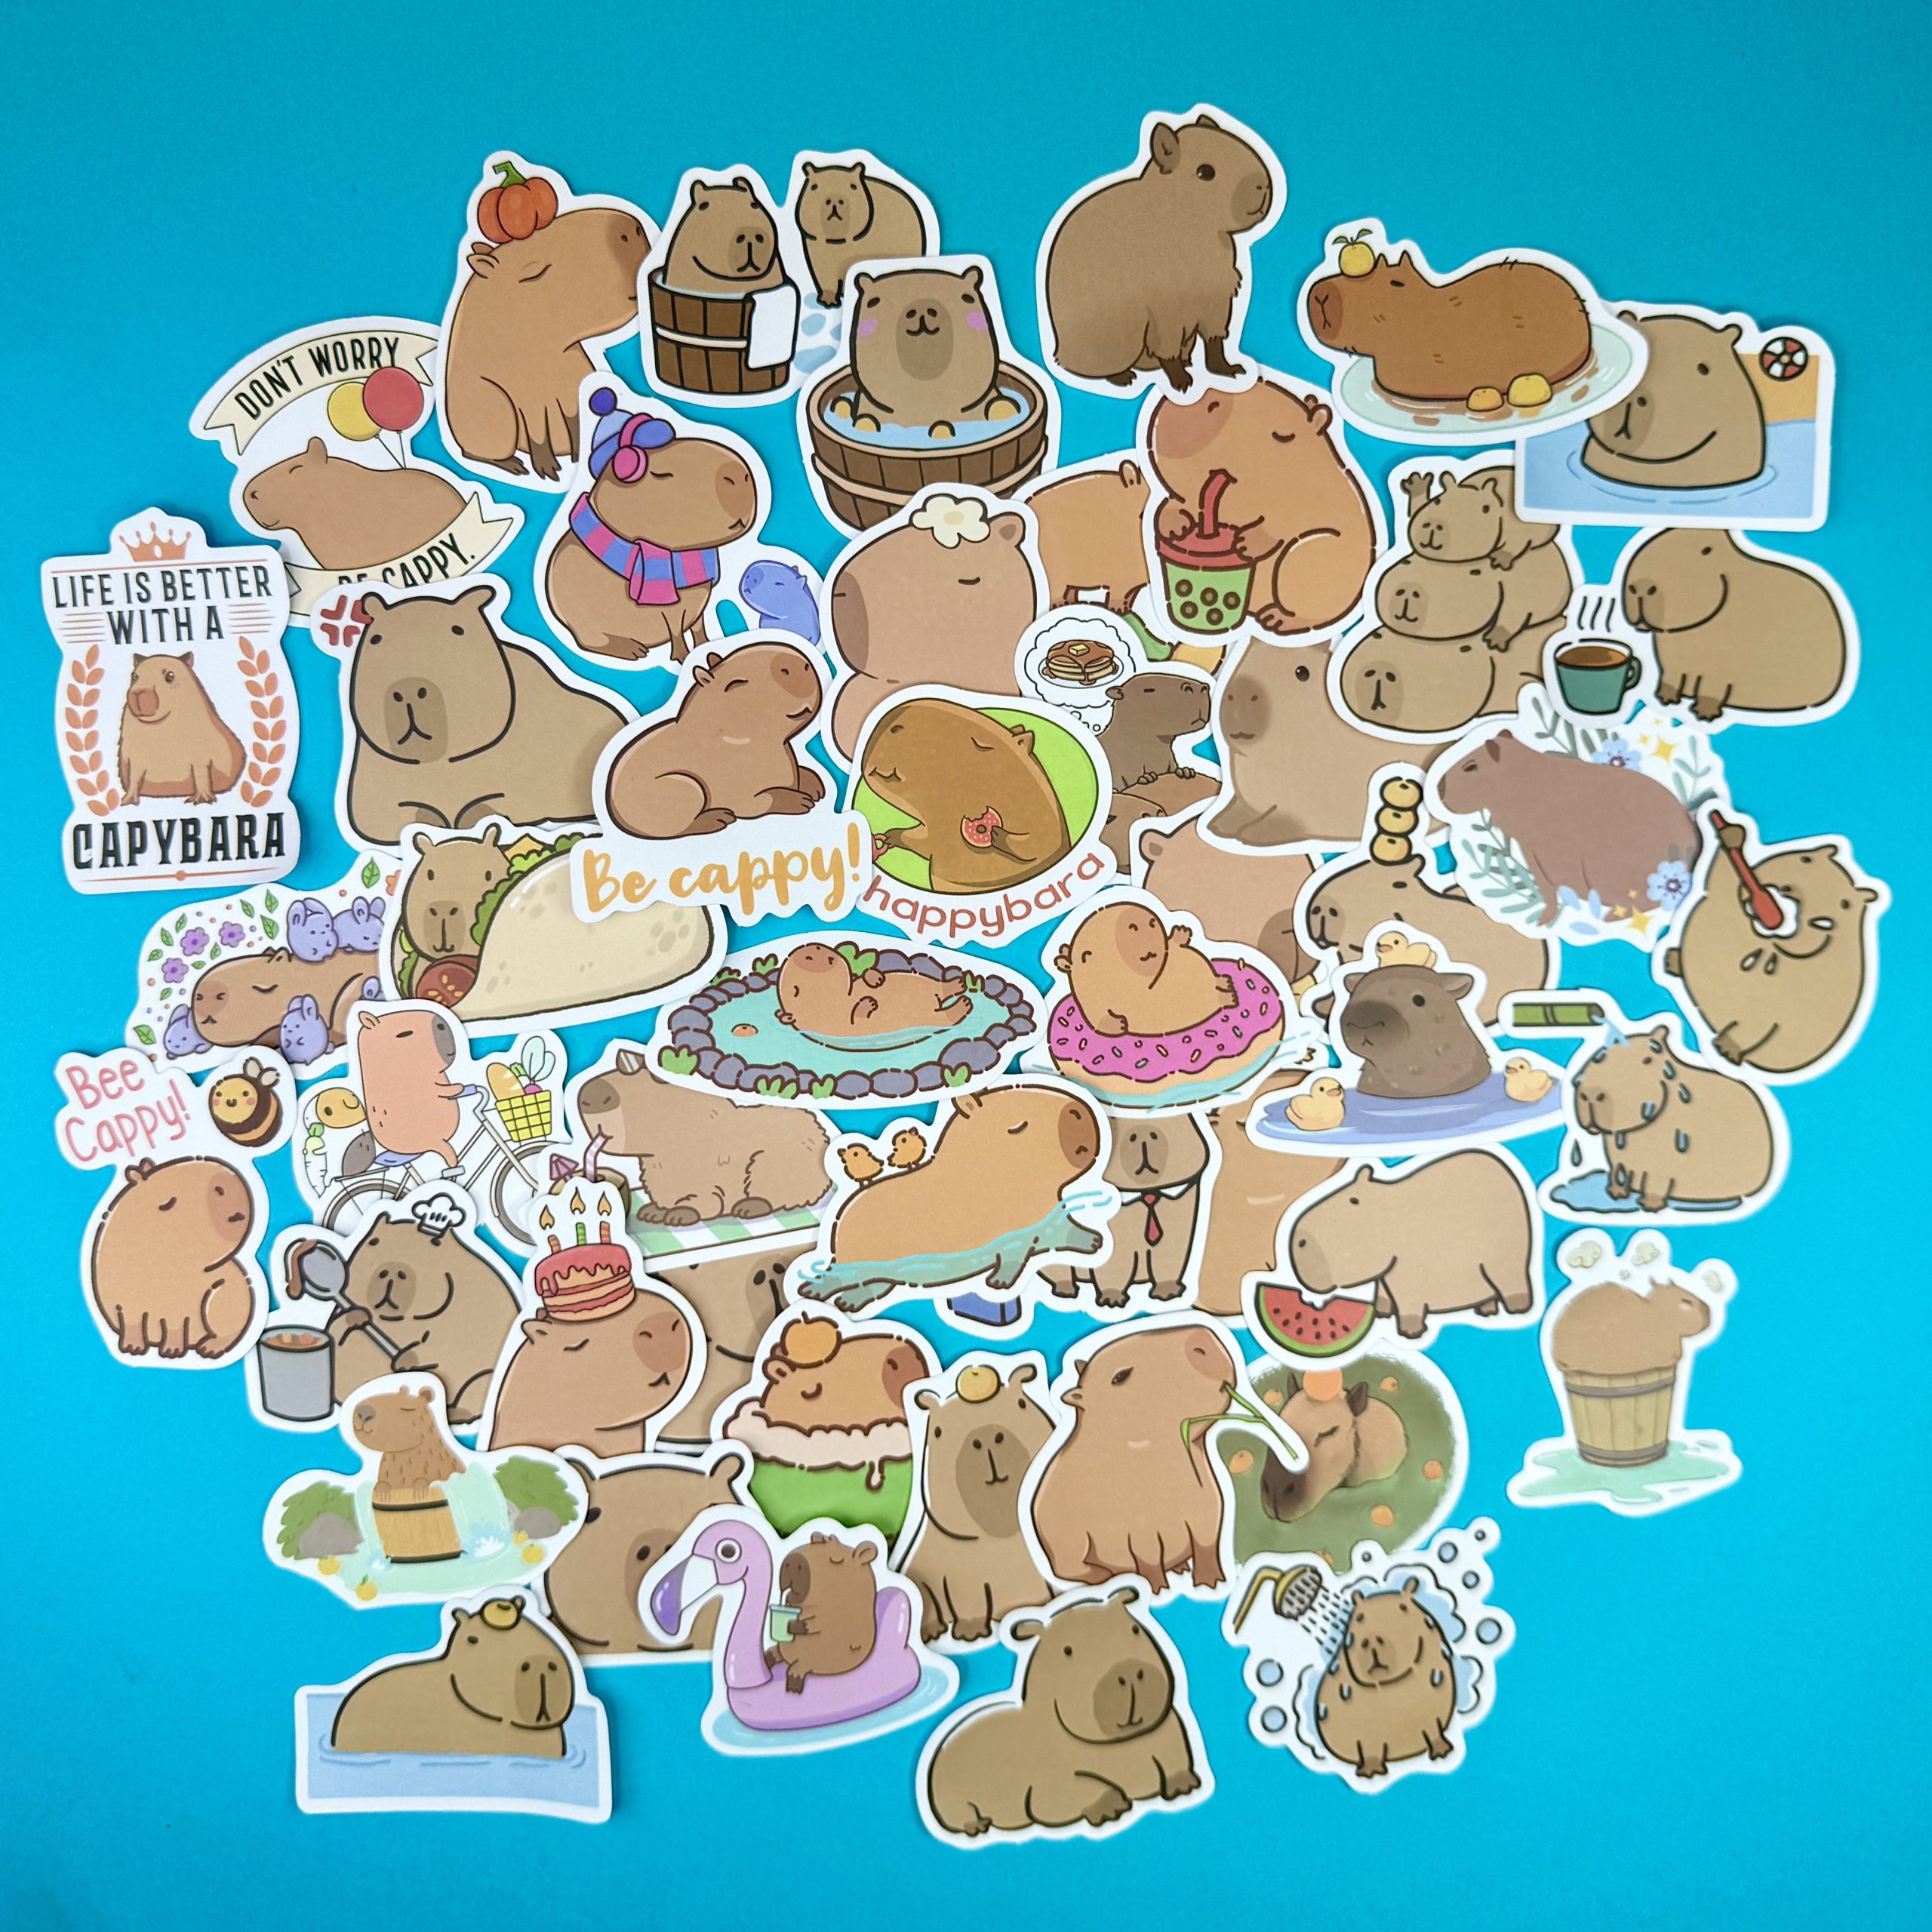 Capybara stickers